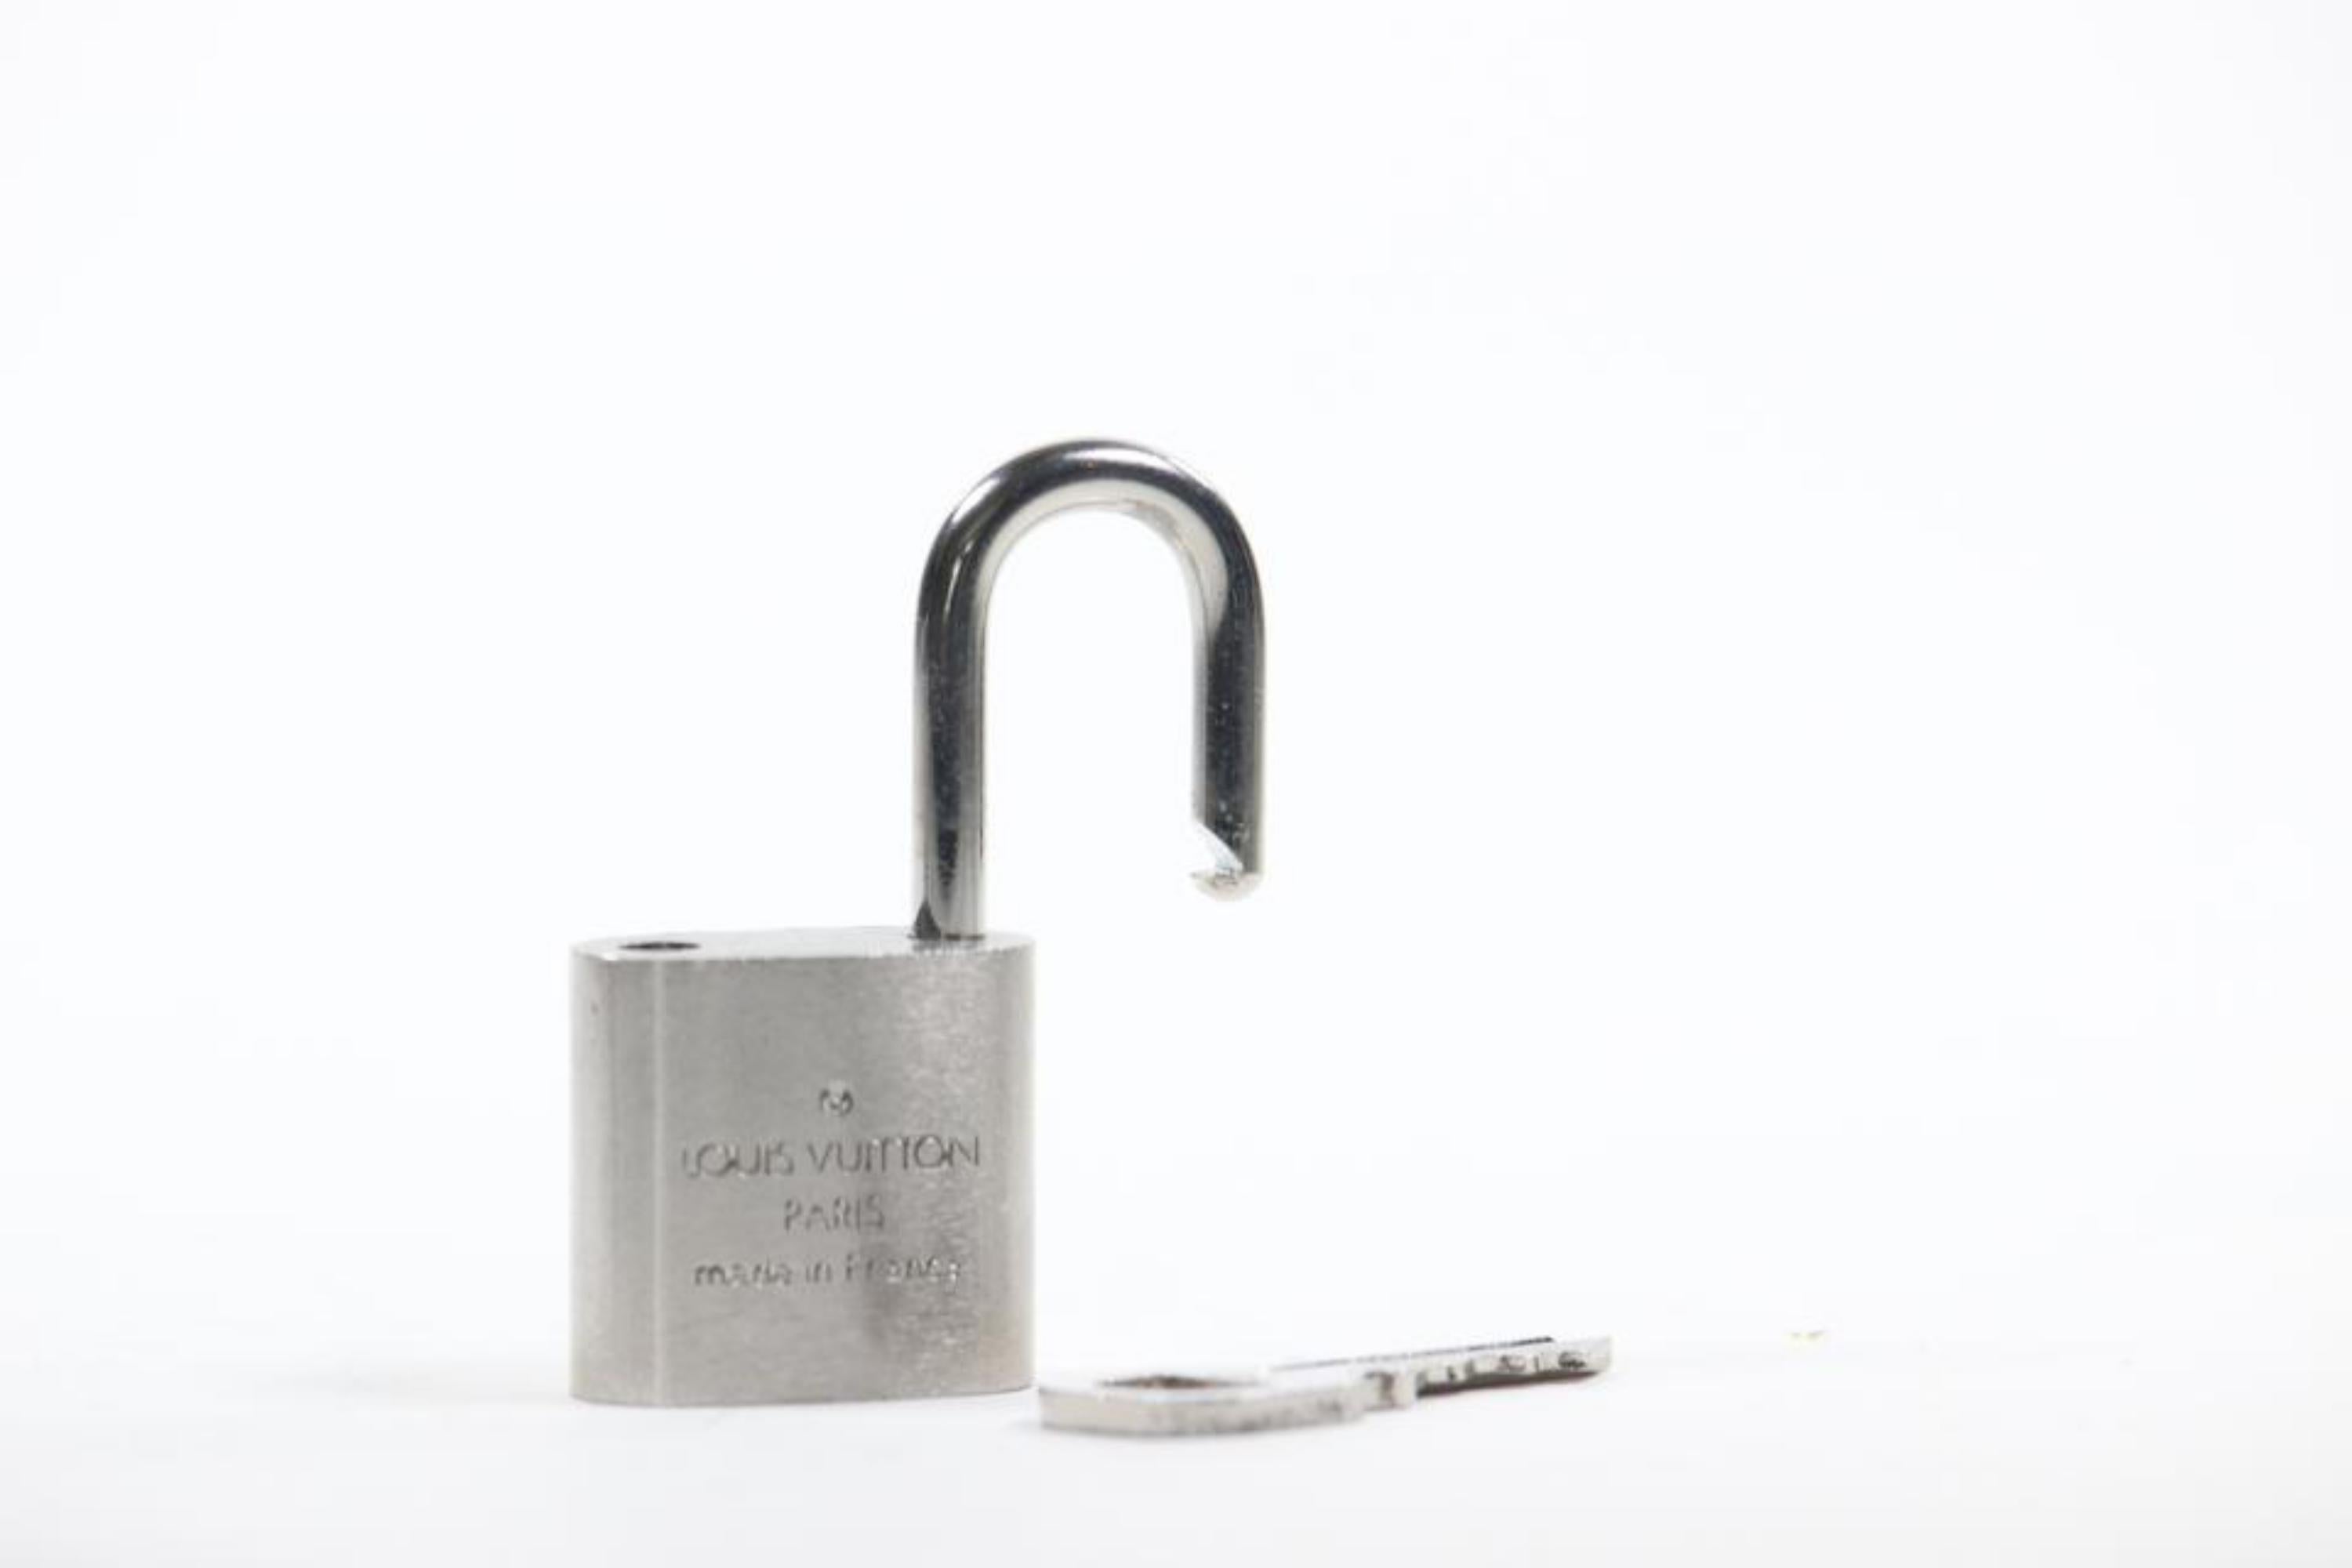 Louis Vuitton Brushed Silver Matte Padlock and Key Bag Charm Lock Set 7LZ1102 4